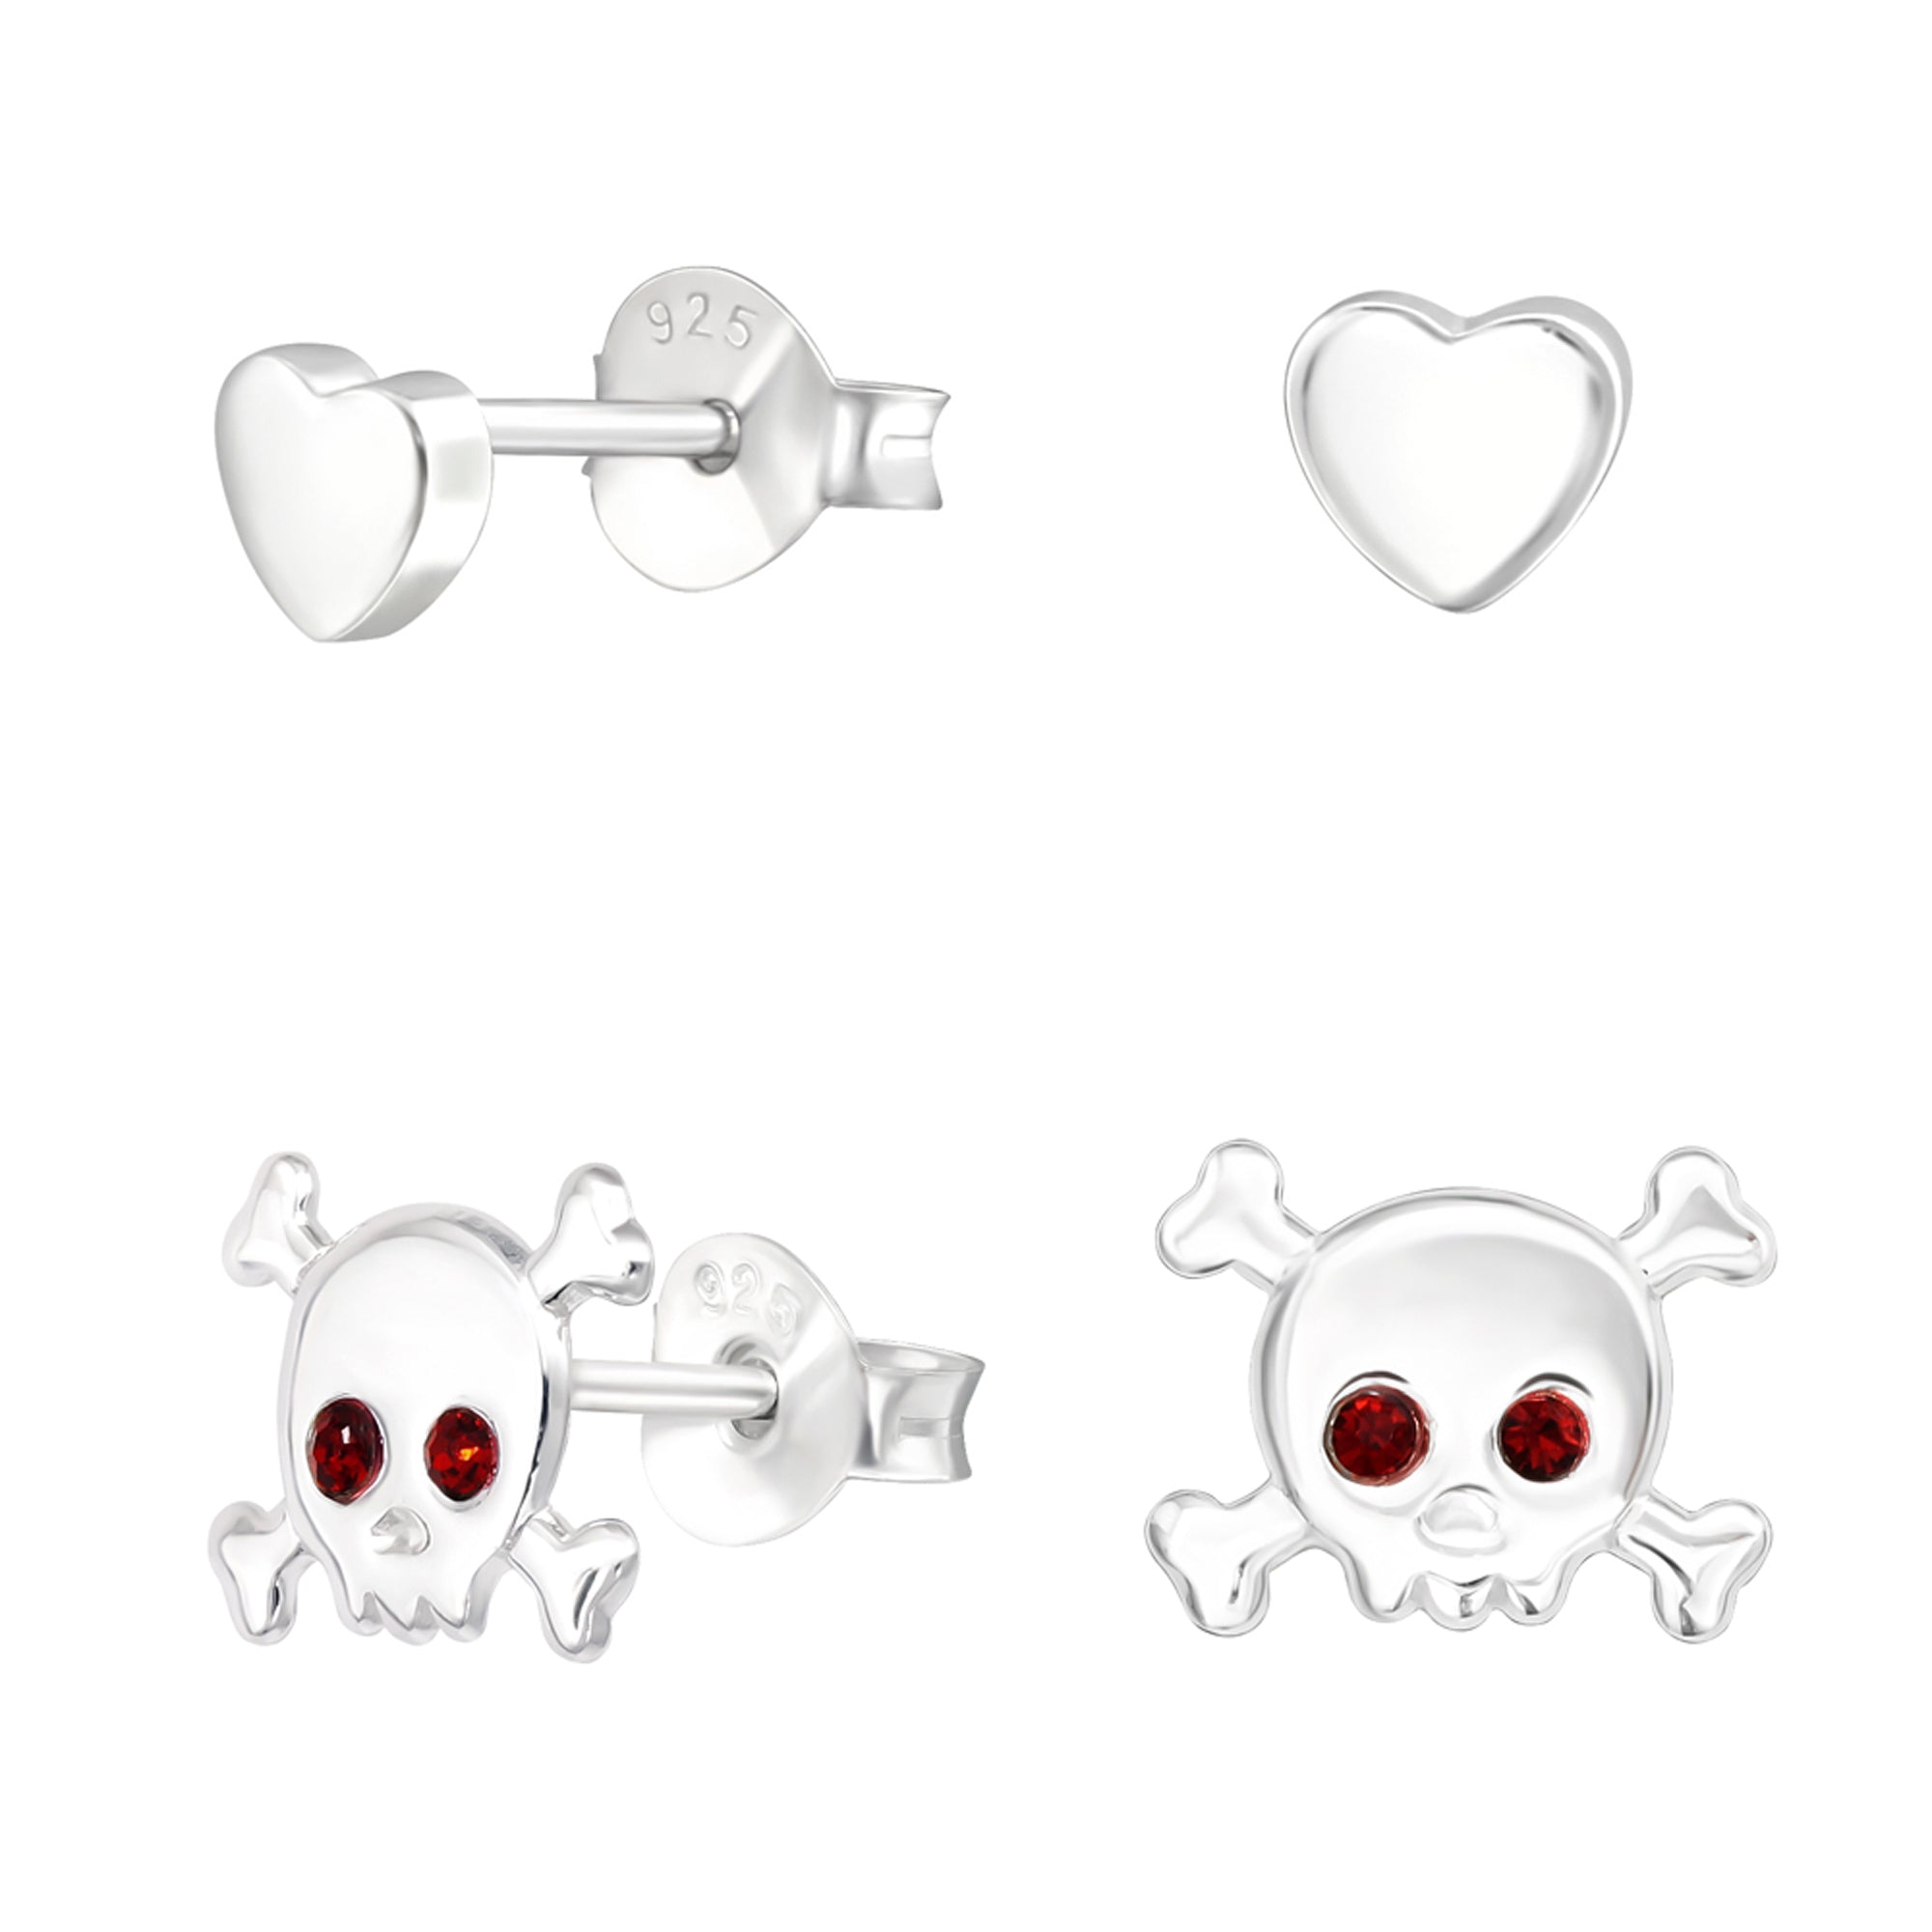 DEADBEAT Rock-Solid 925 Recycled Silver Rock Solid Heart Ear Stud & Red Crystal Eyed Skull & Crossbones Ear Stud Pack